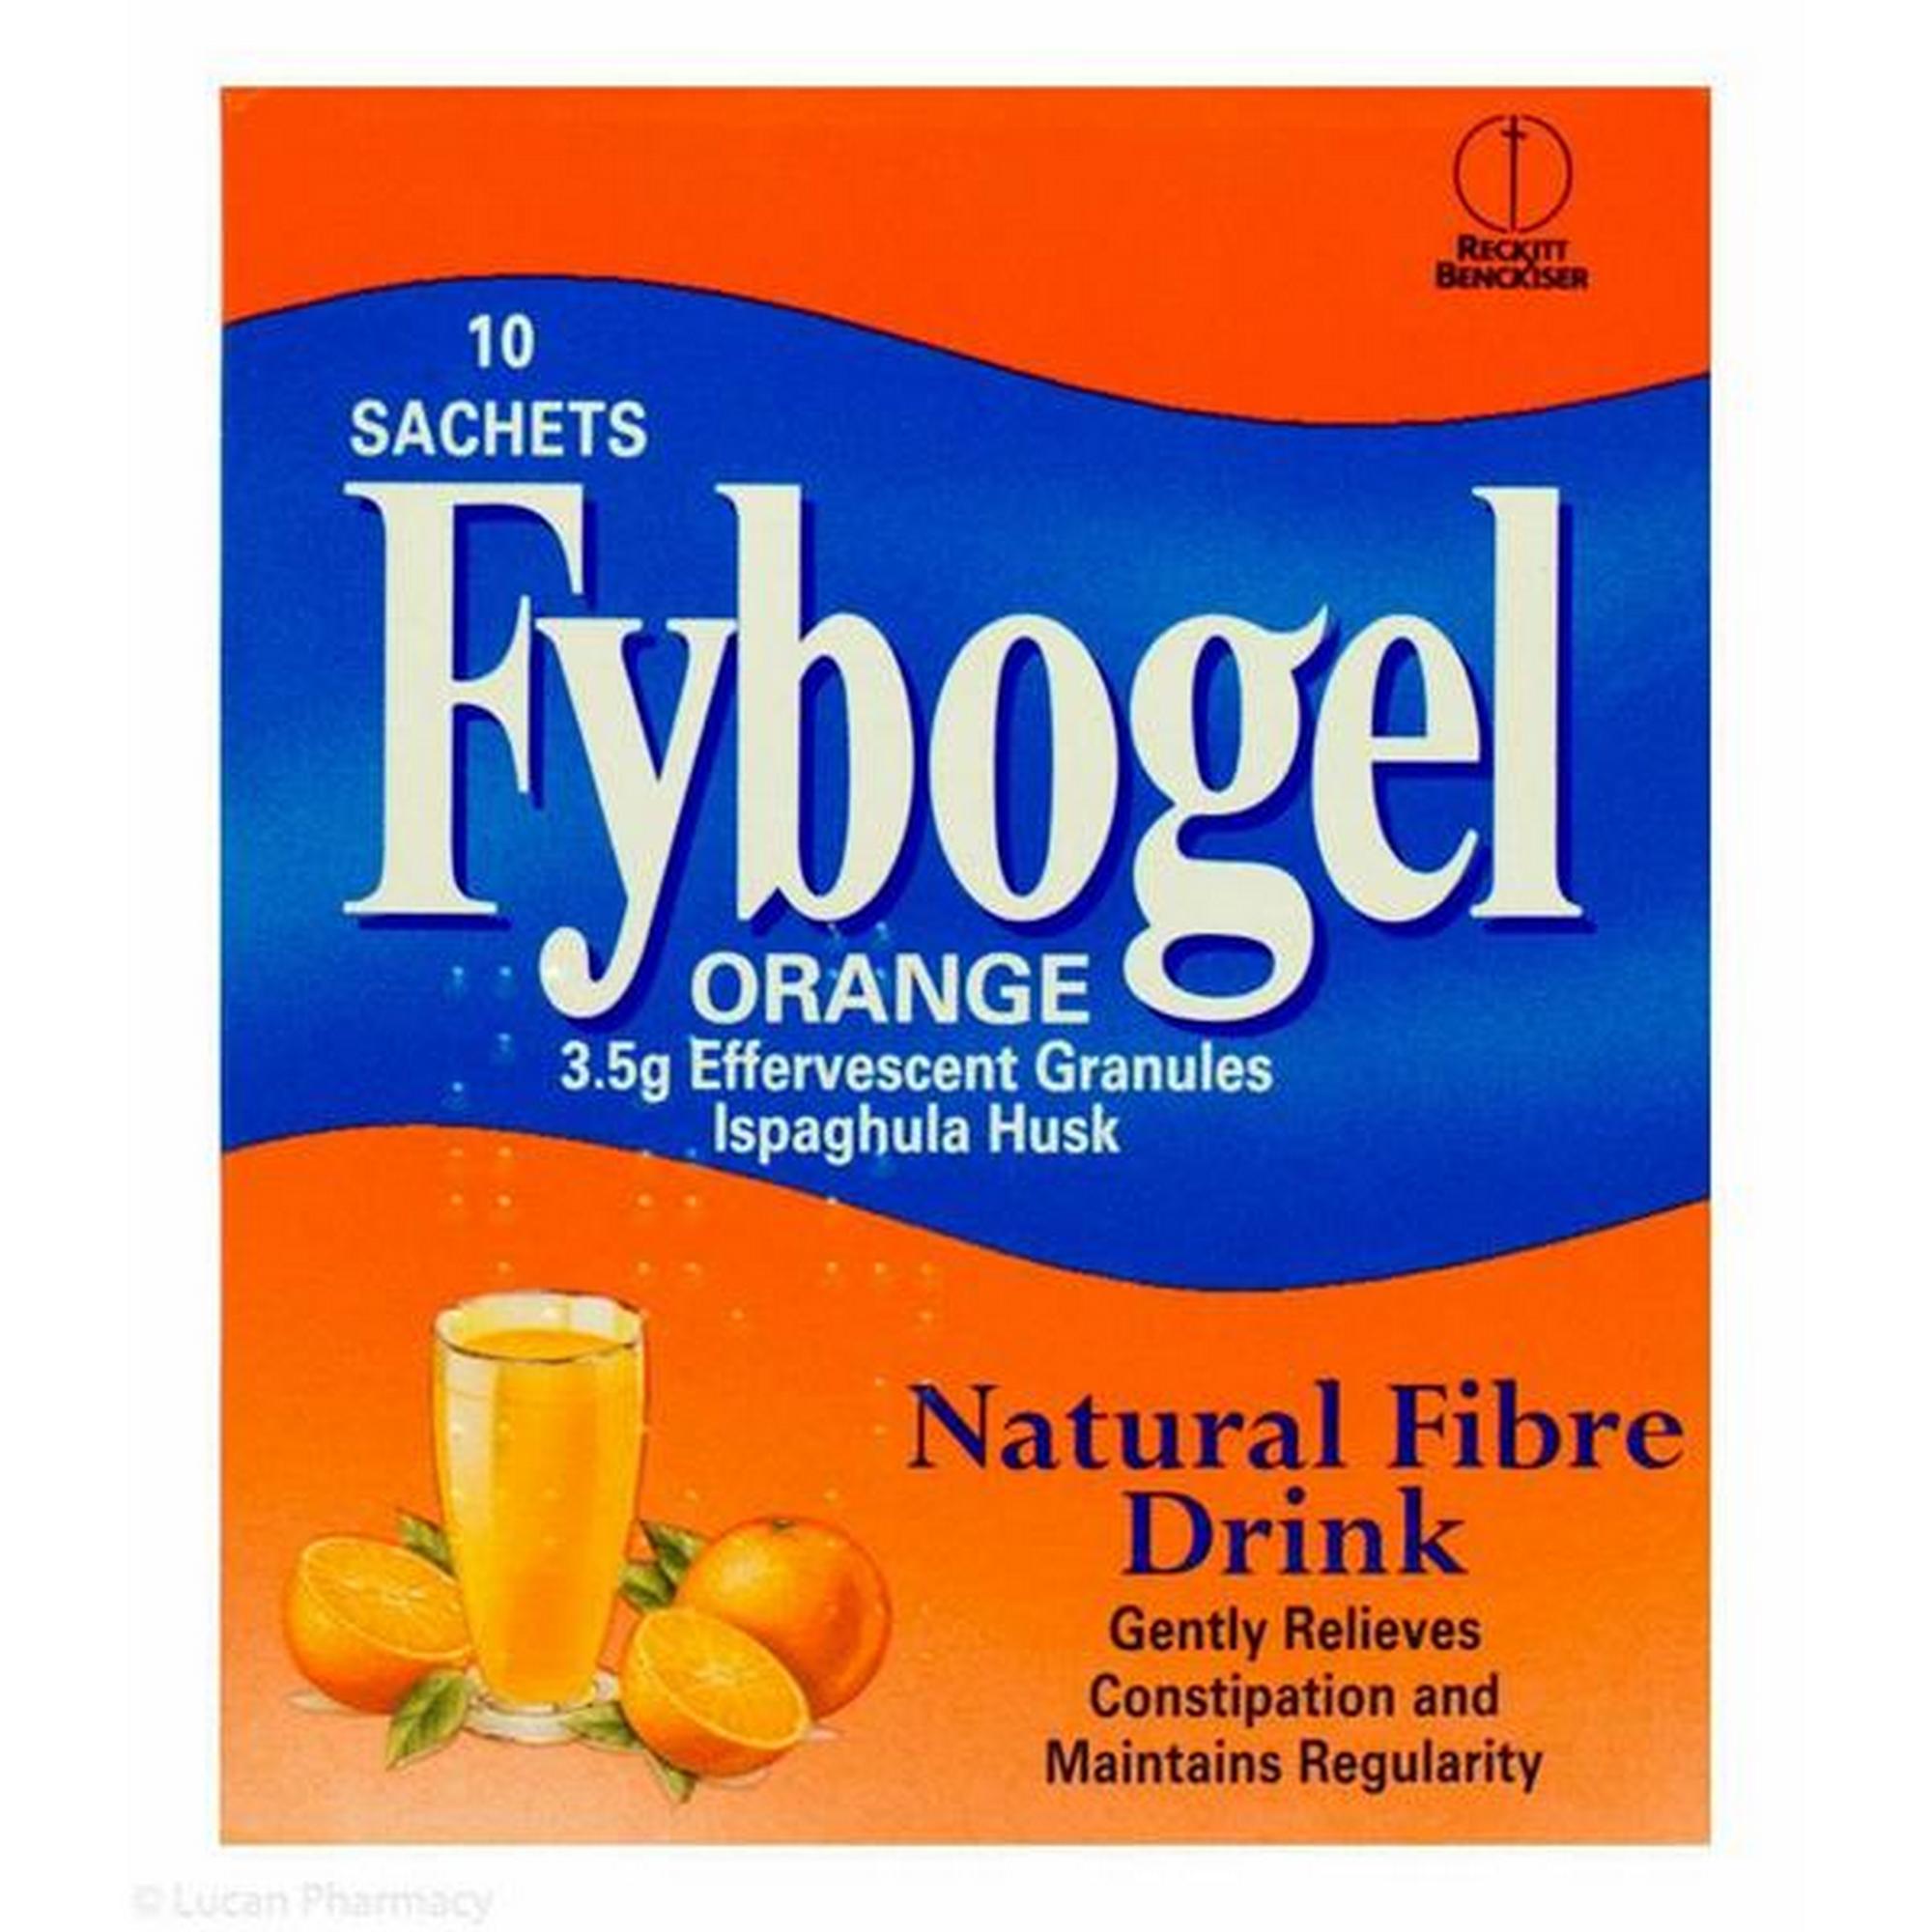 FyboGel Orange Sachets -10